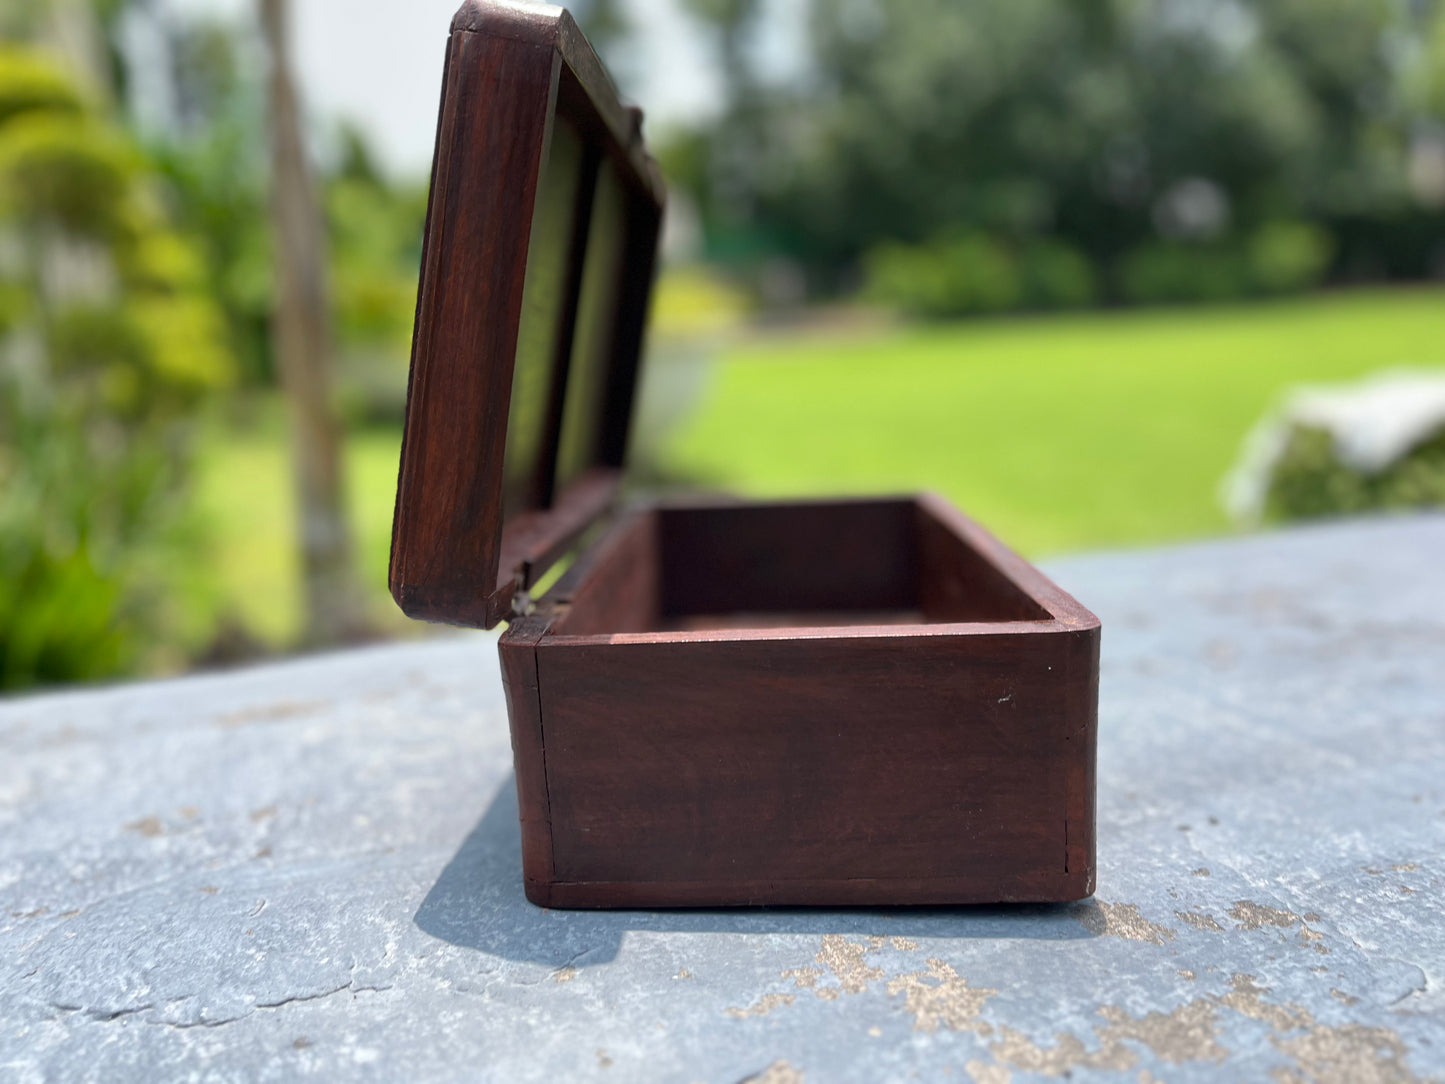 Handcrafted Brass Inlay work wood Jewelley Box